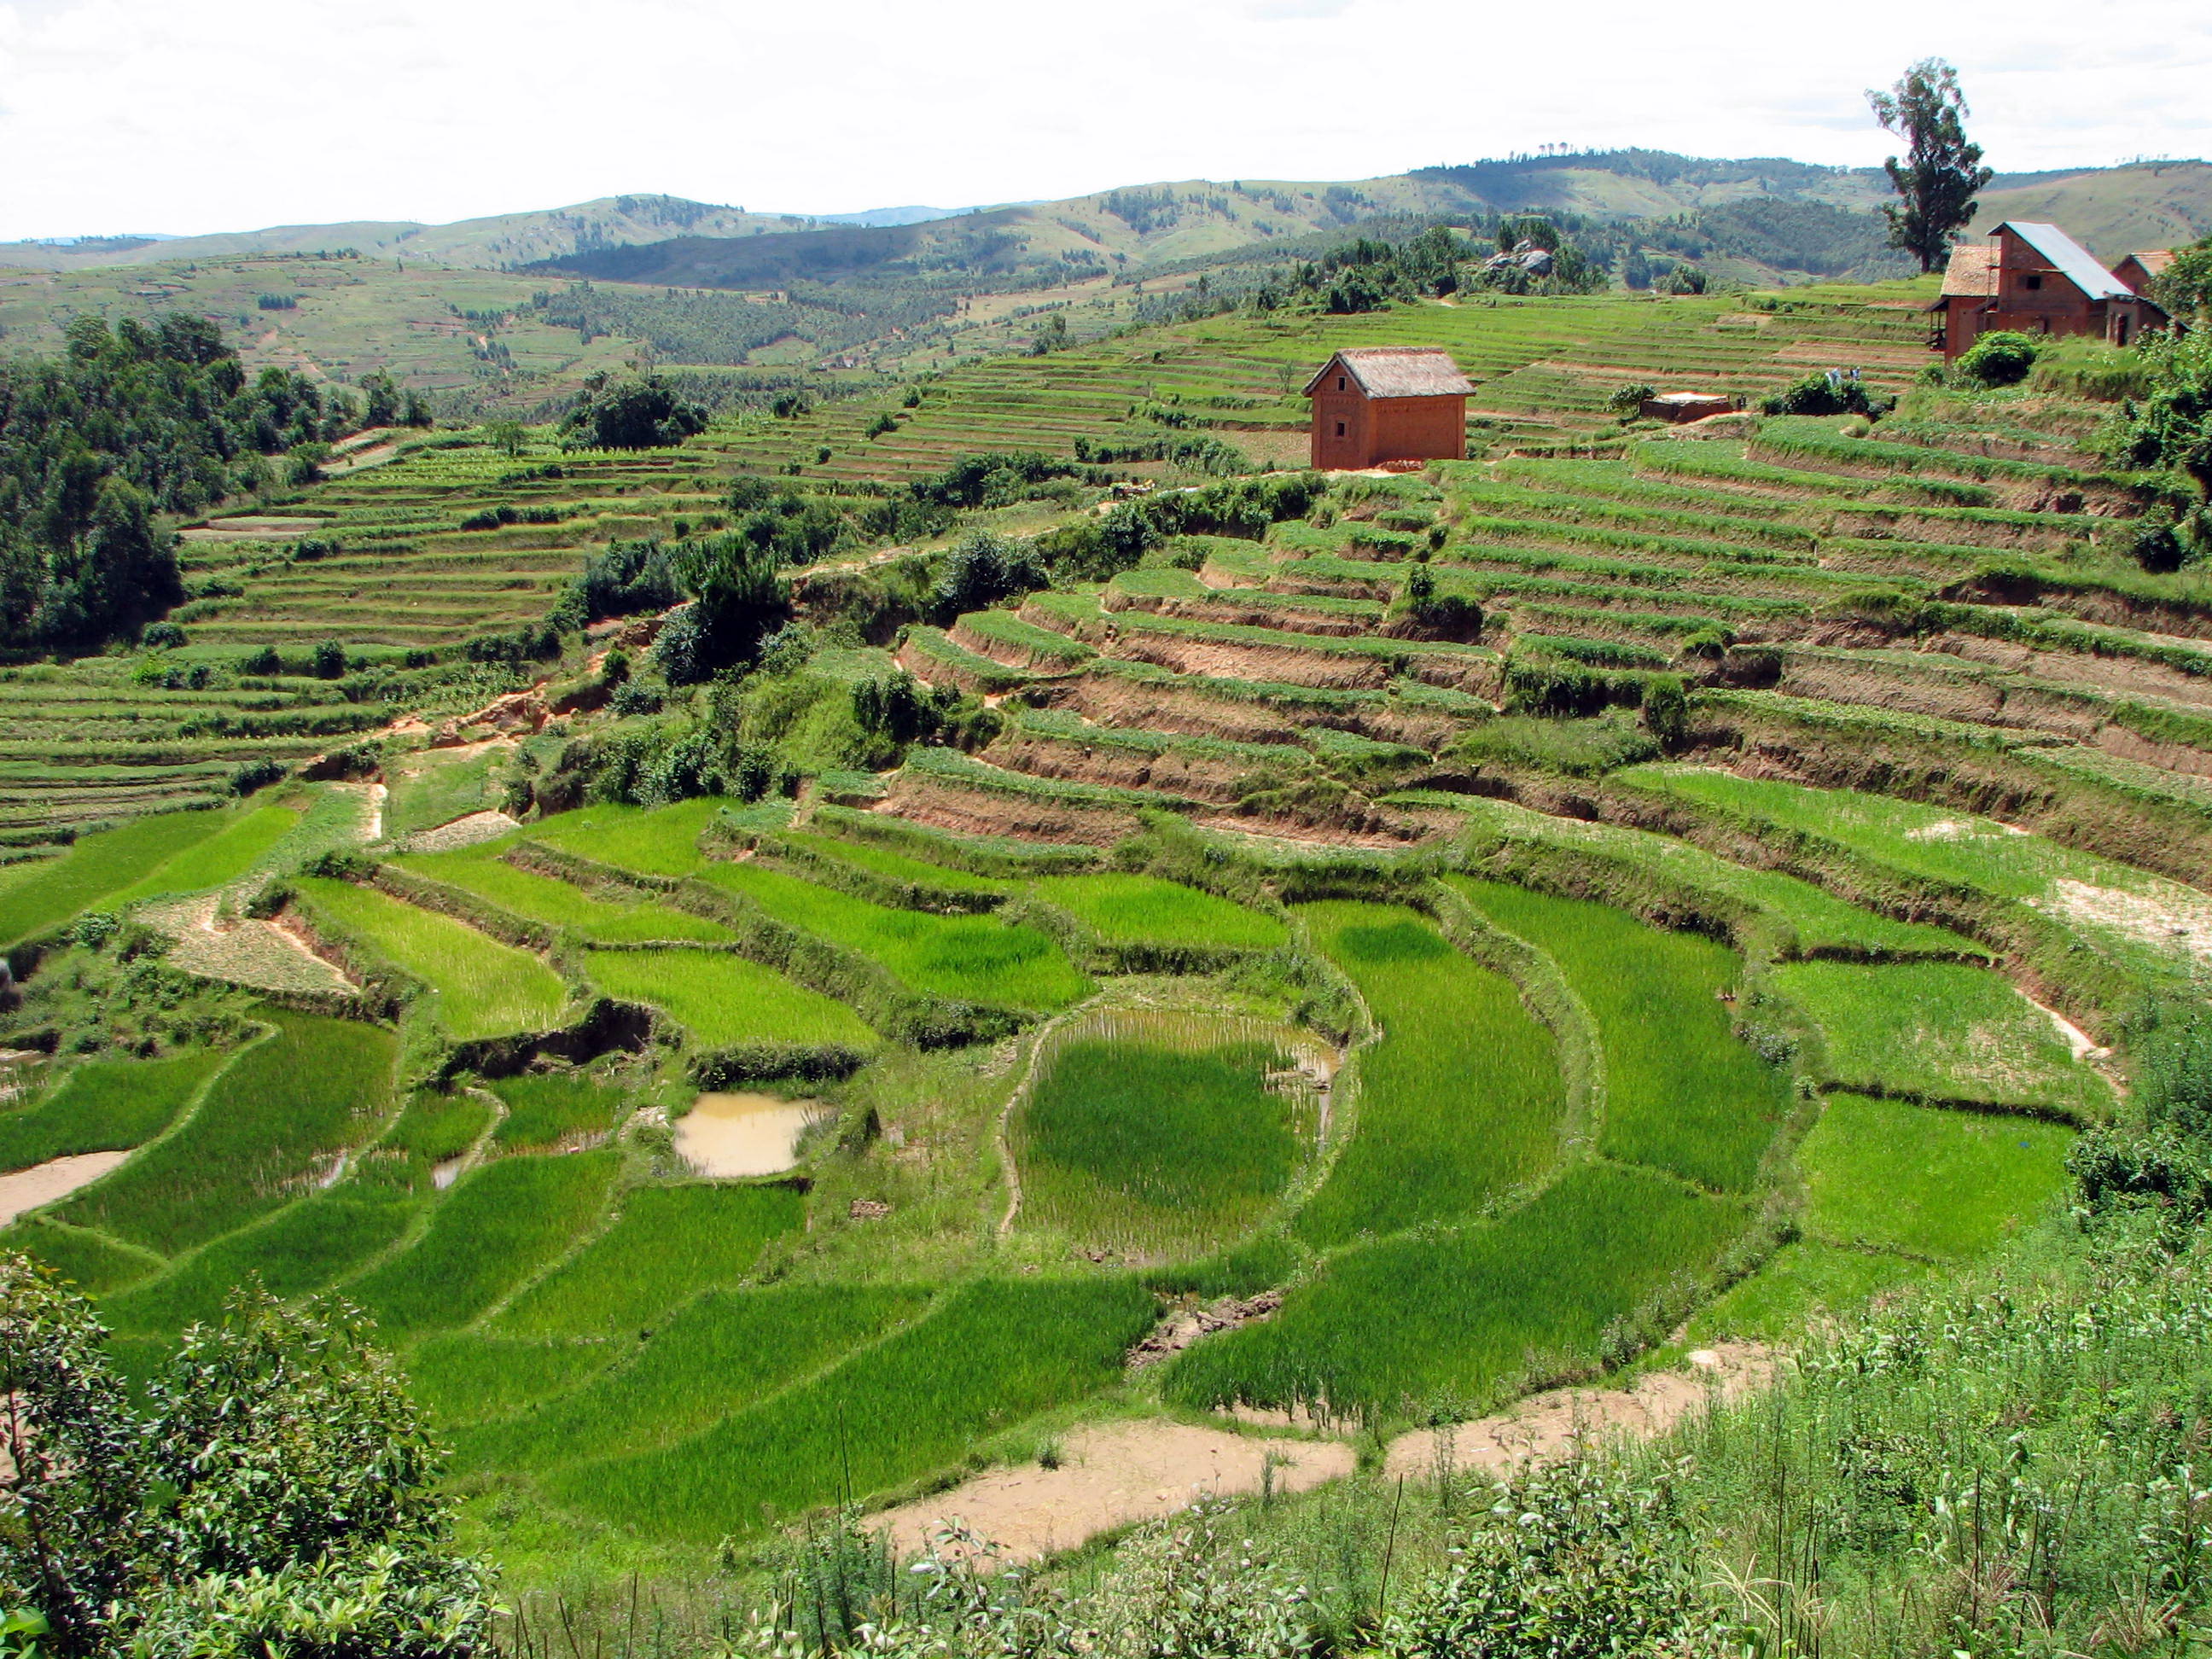 Madagascar Landscape